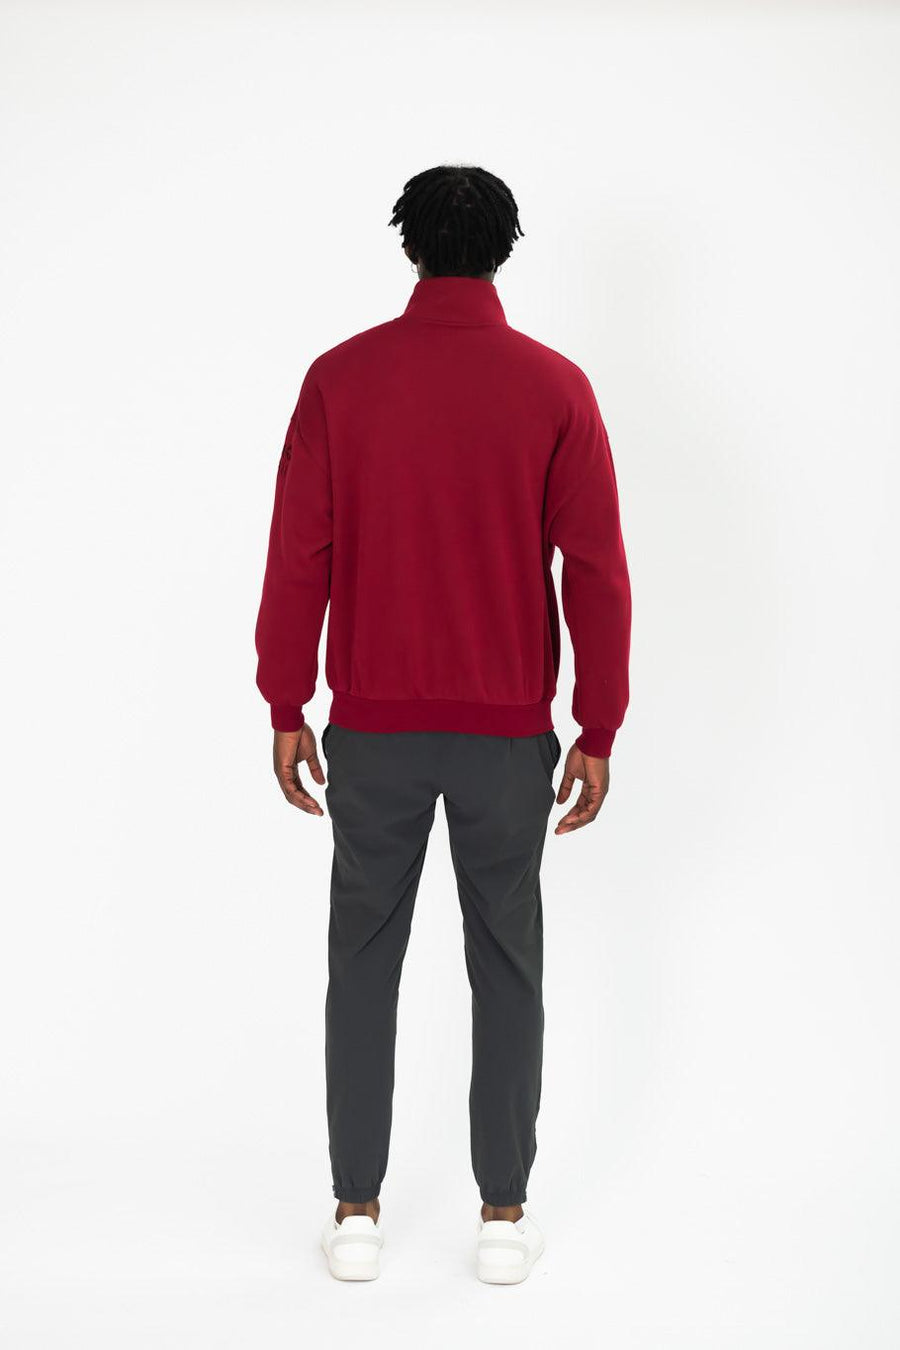 Snap Collar Sierra Sweatshirt in Deep Cherry - Sweatshirts - Gym+Coffee IE